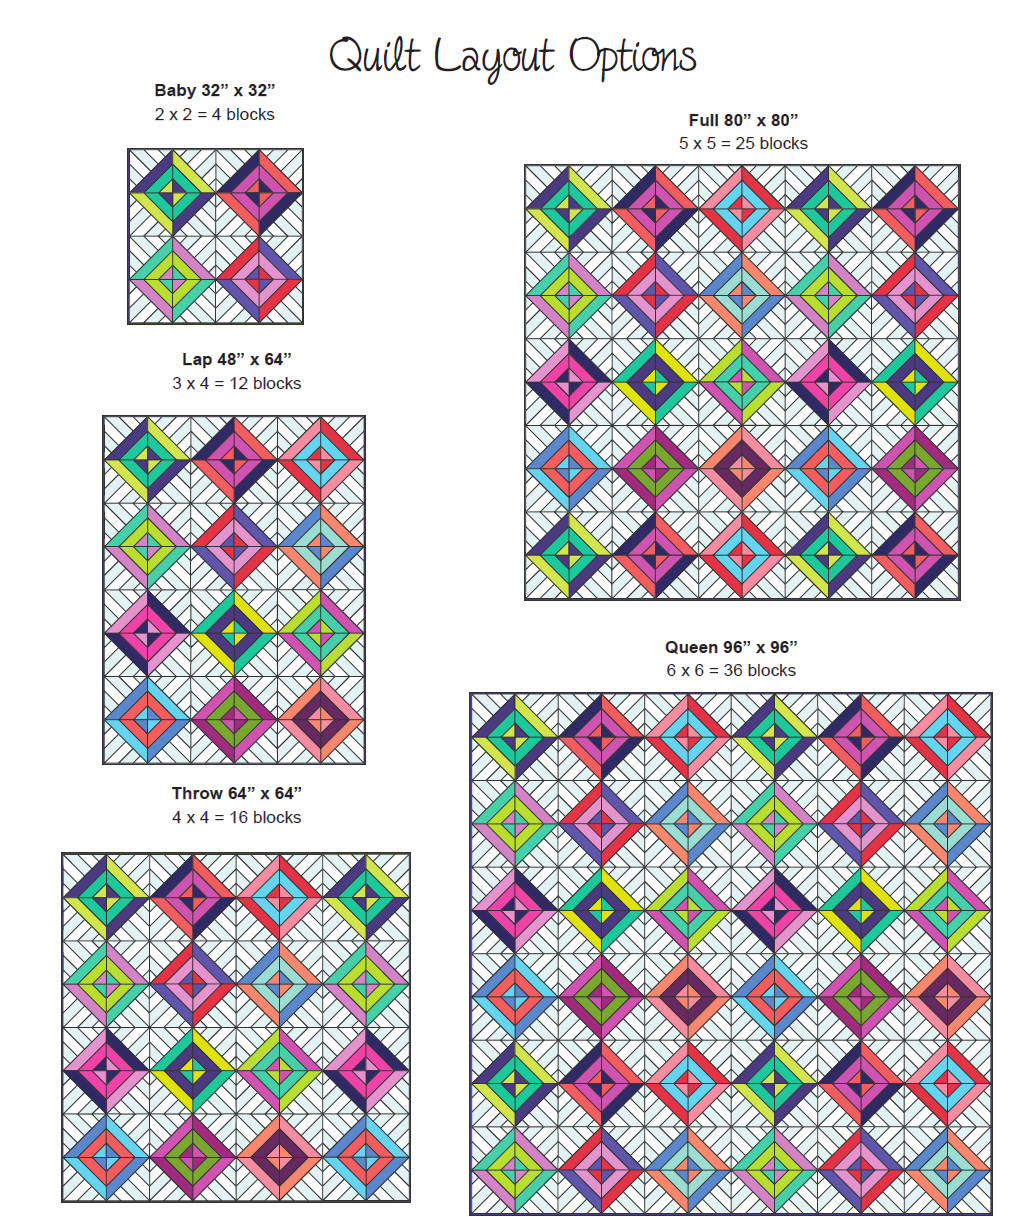 Spellbound Quilt Pattern by Joanna Marsh - English Paper Pieced Pattern